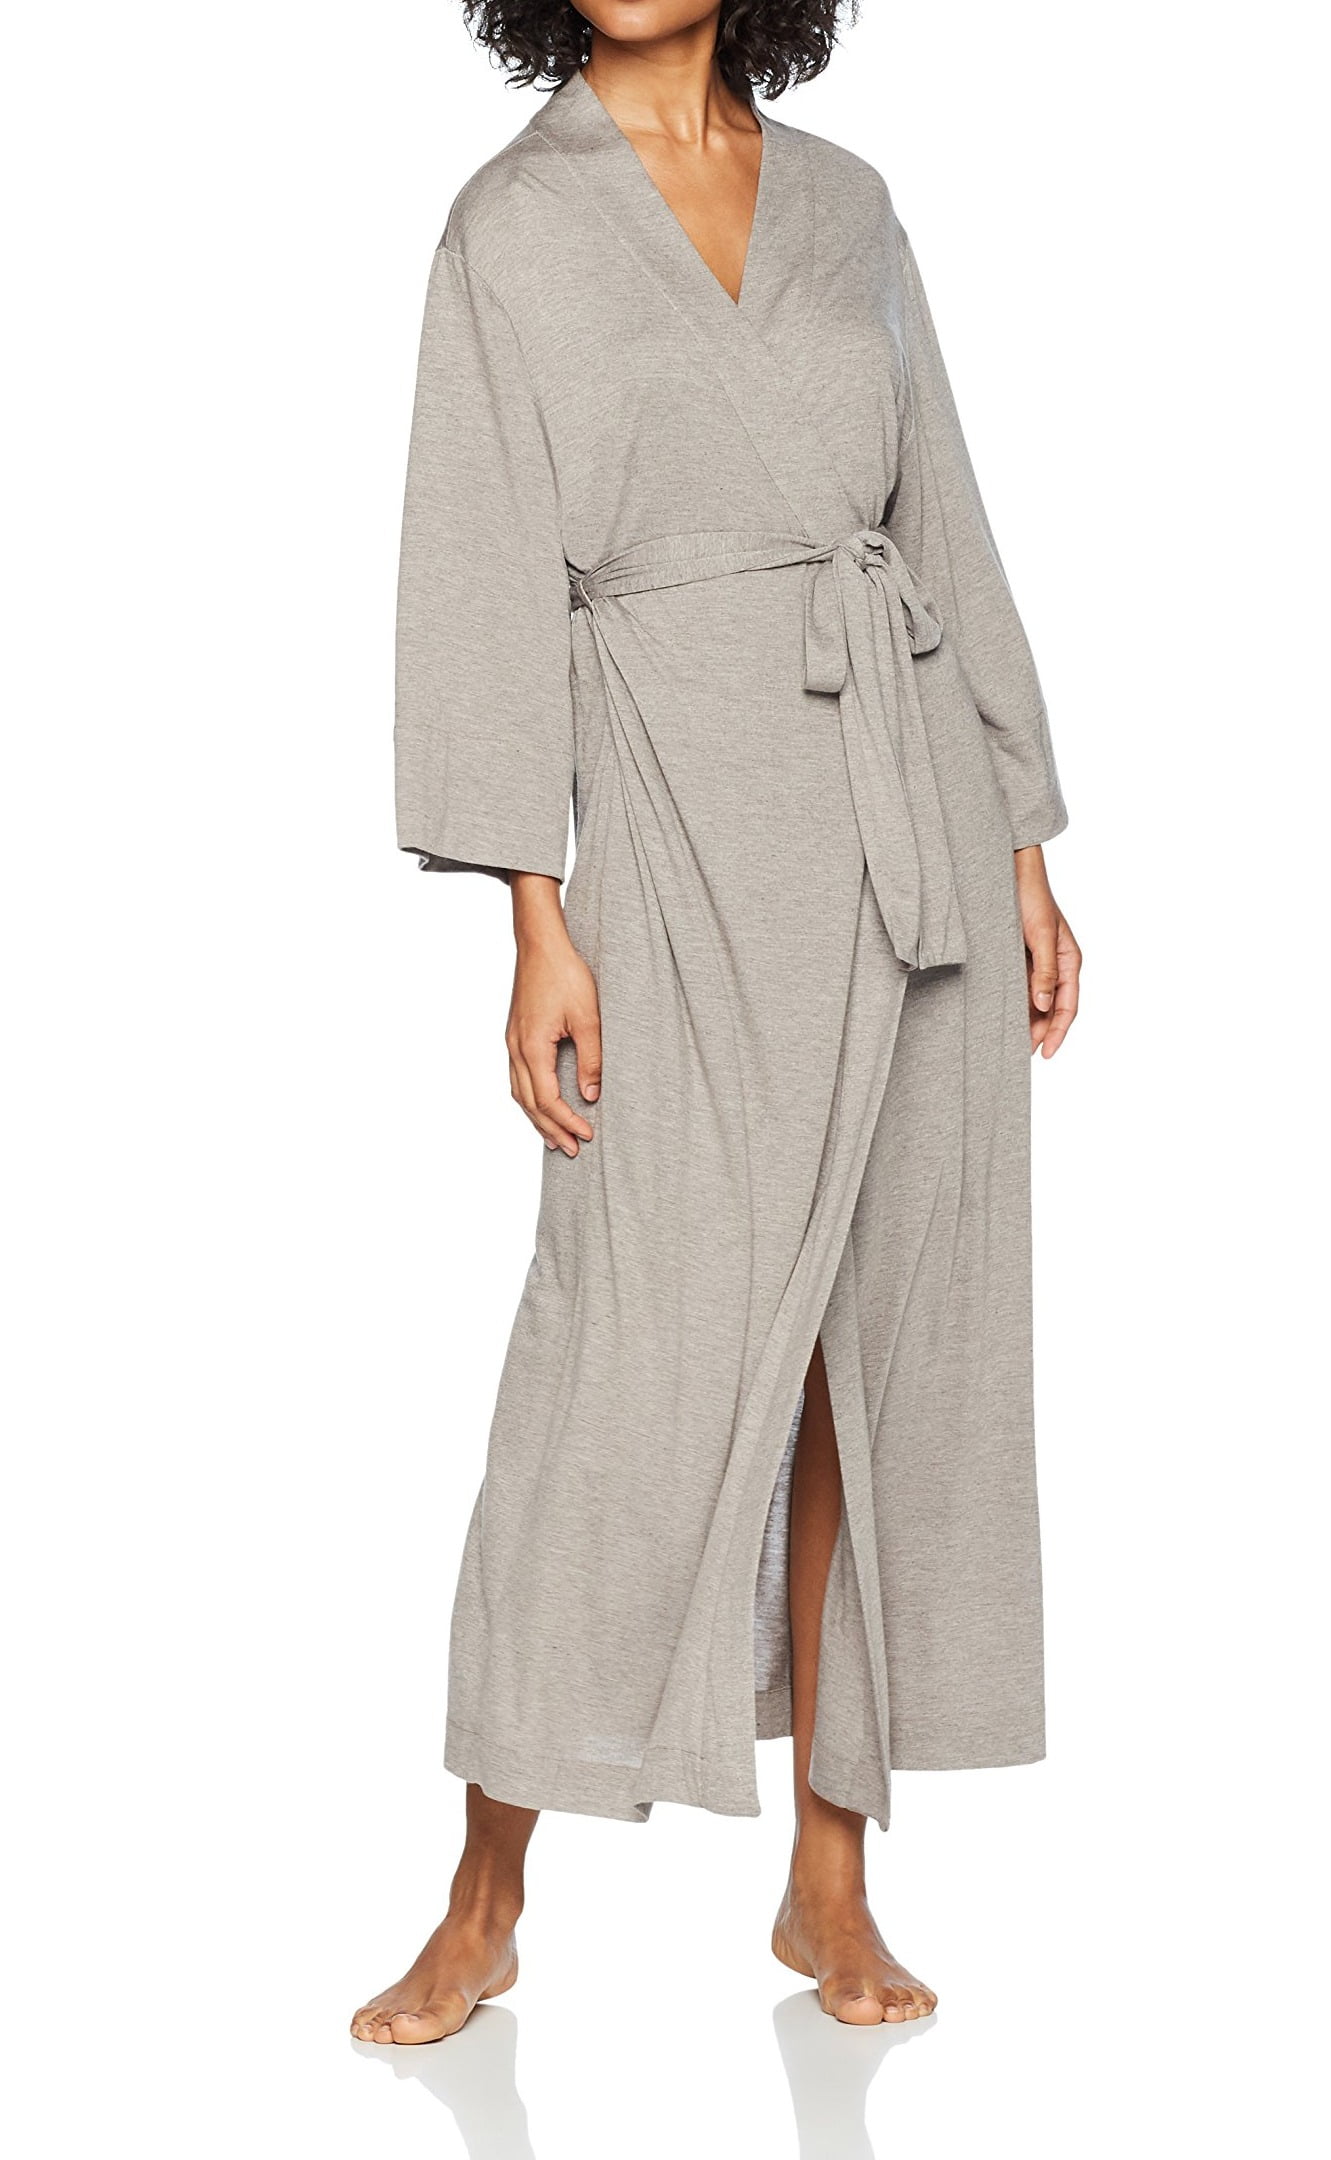 Natori - Natori Womens Shangri La Robe Belted Sleepwear - Walmart.com ...